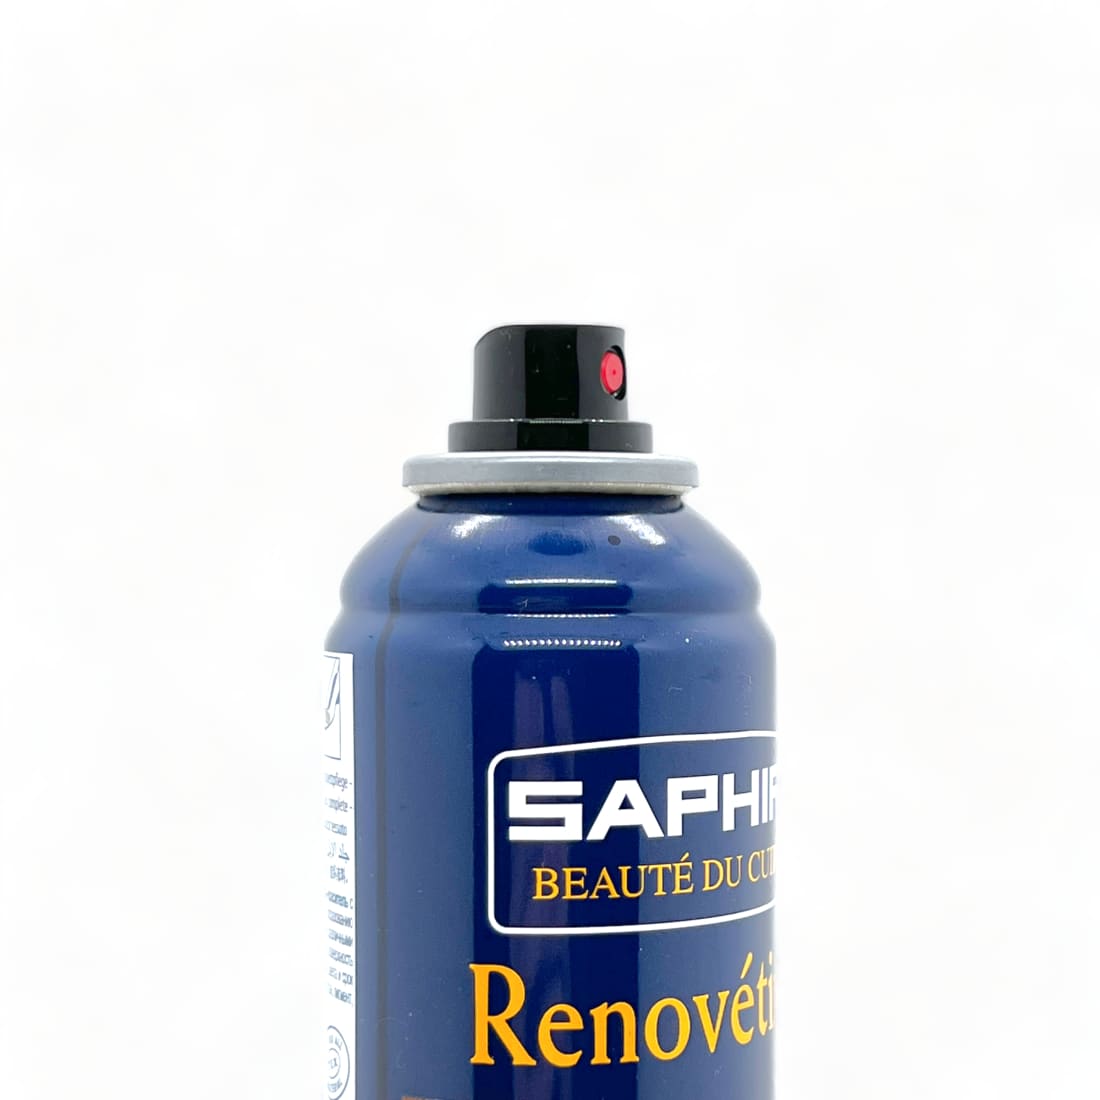 Spray Rénovétine Daim Gris Foncé - Saphir - 200 ml -